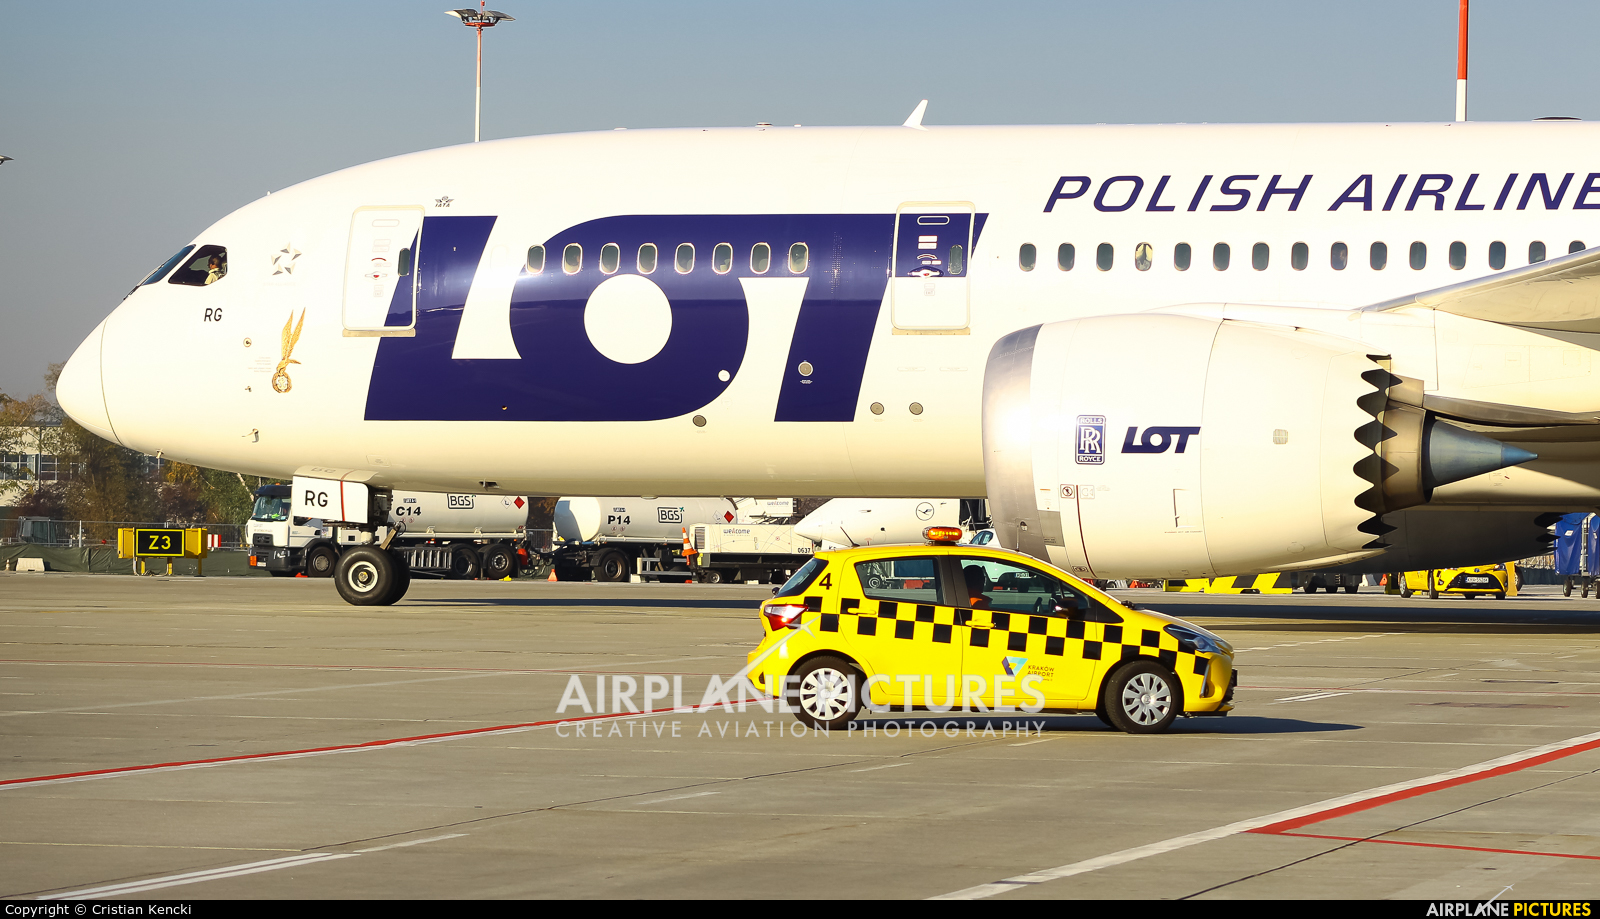 LOT - Polish Airlines SP-LRG aircraft at Kraków - John Paul II Intl